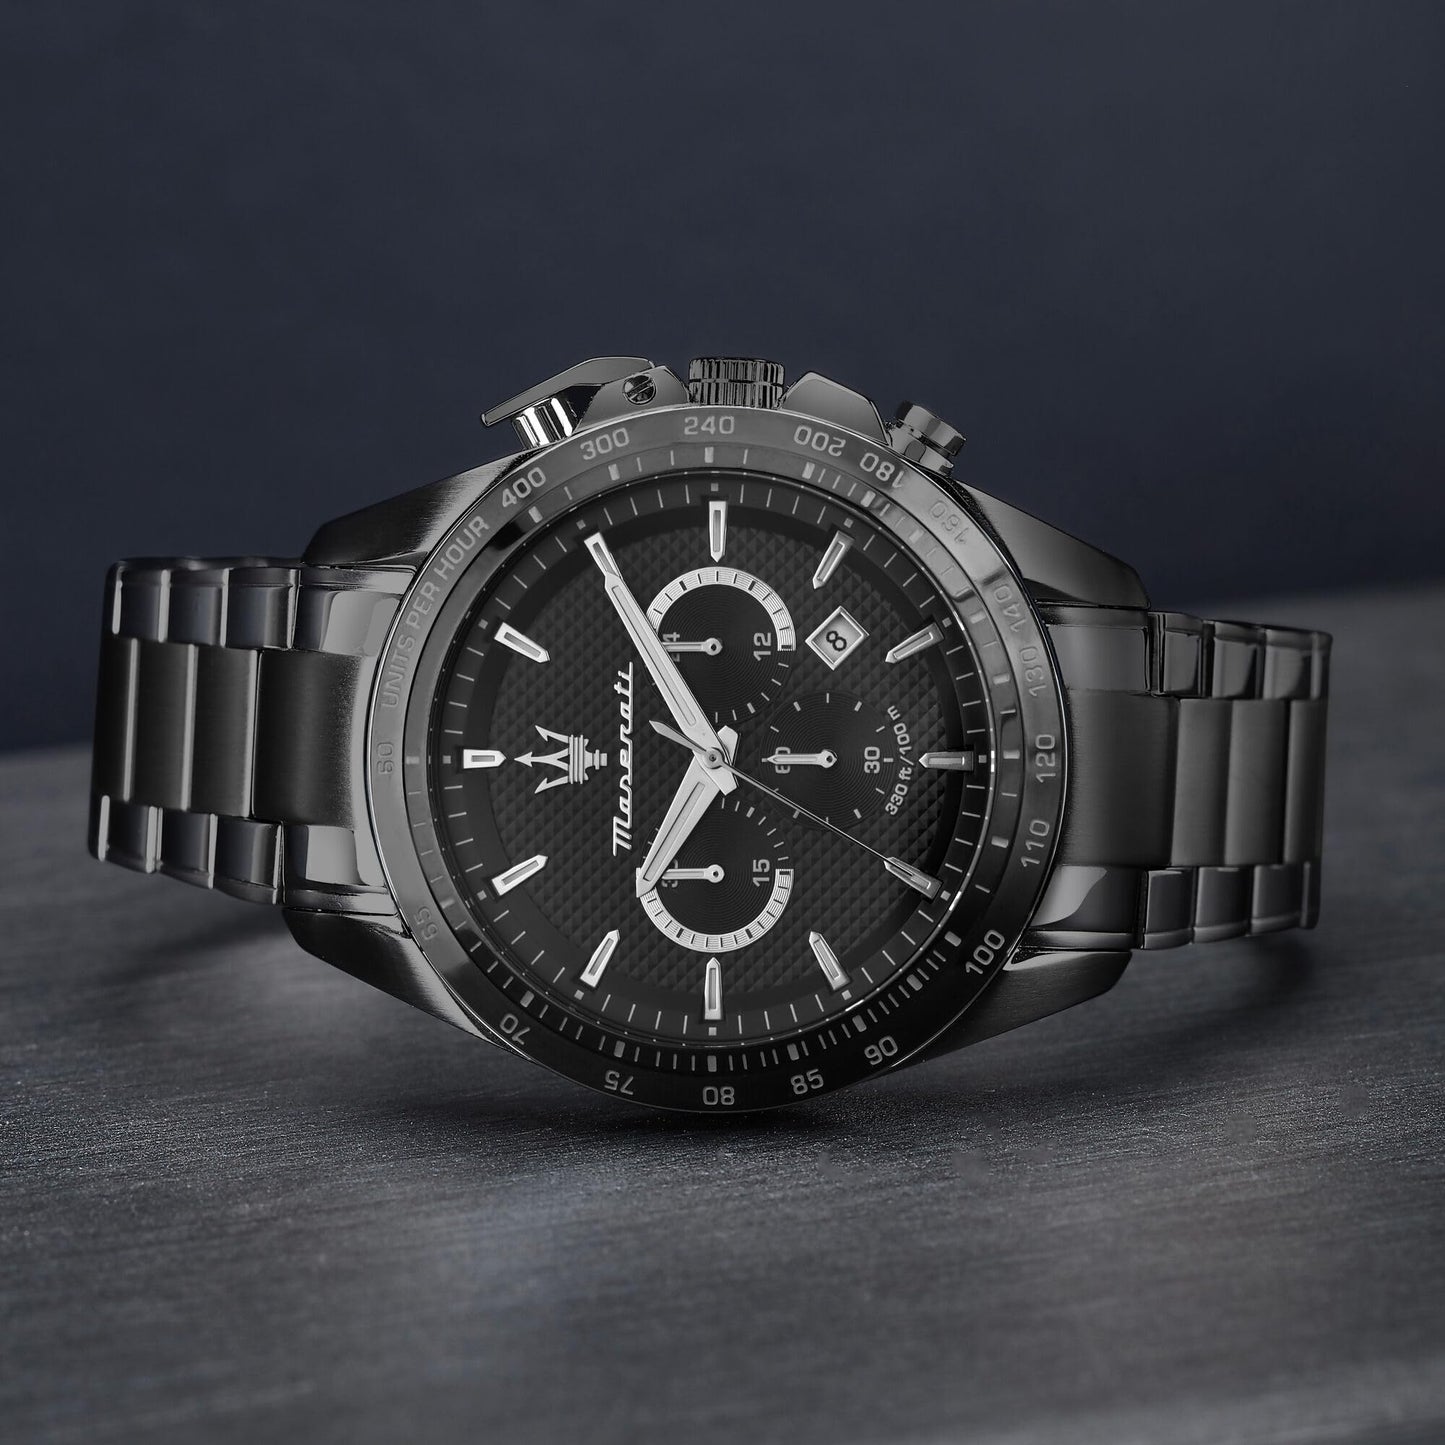 Maserati Men's Watch Traguardo Limited Edition, Chronograph, quartz watch - R8873612045